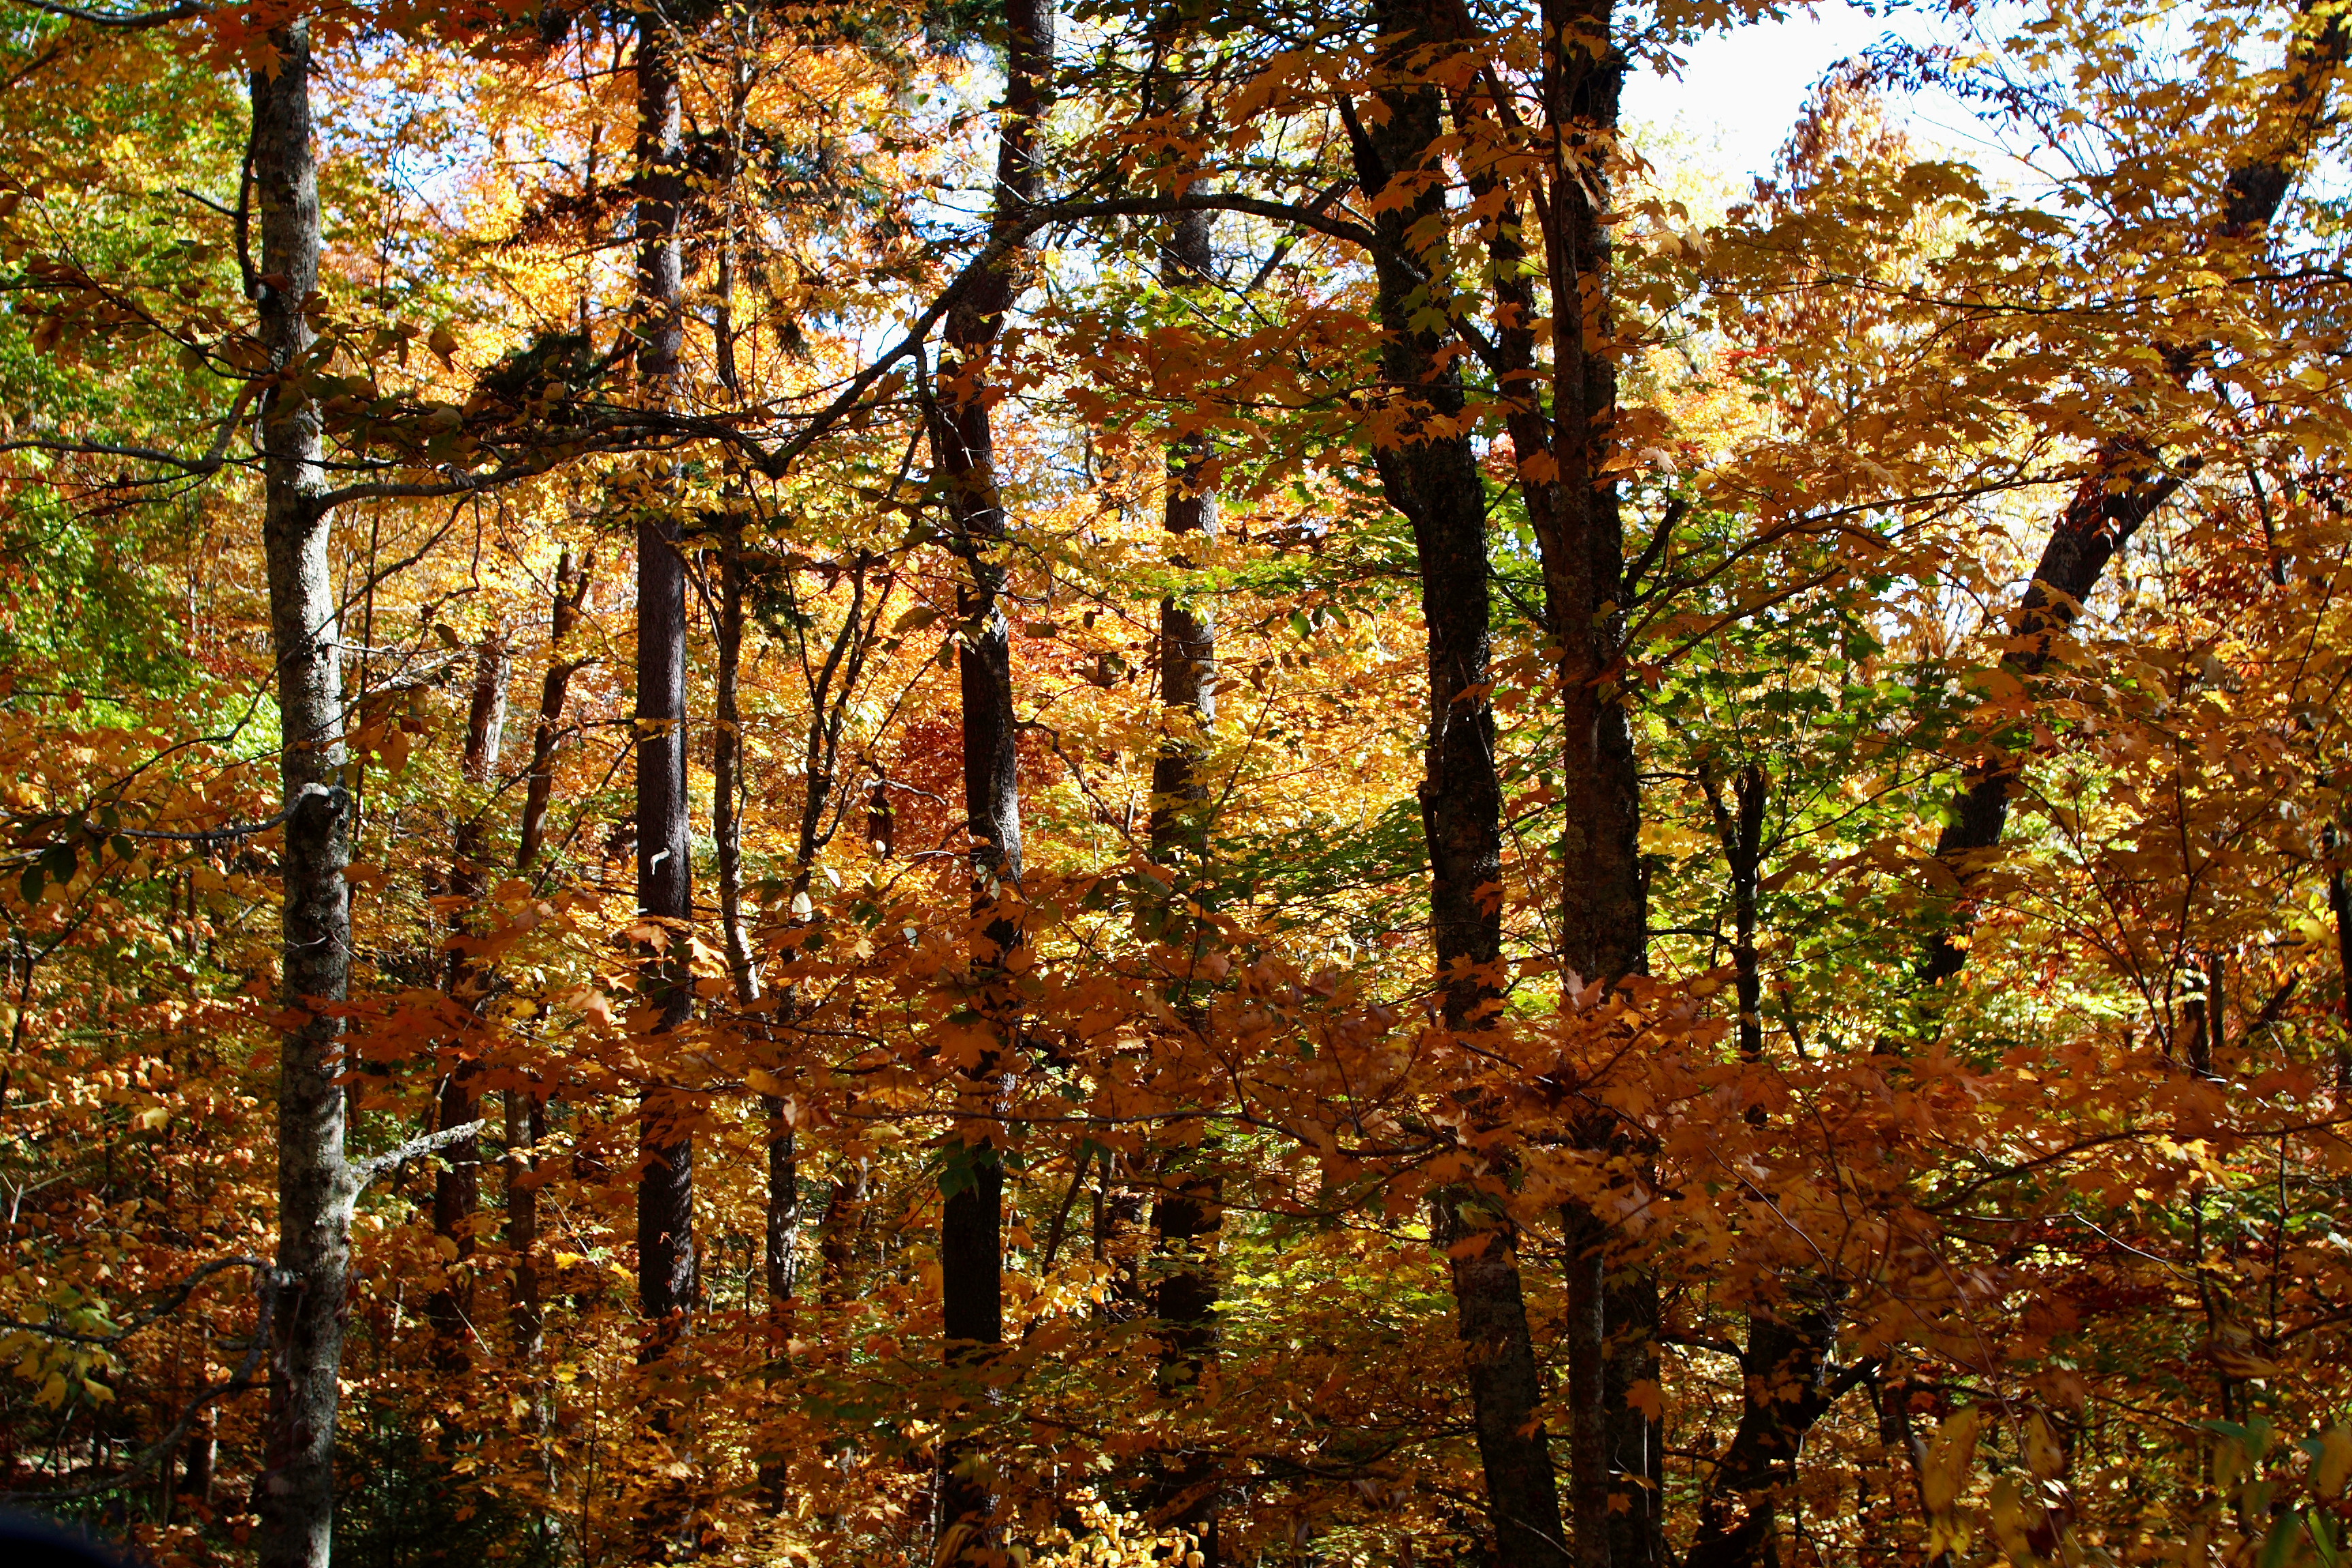 Fall-trees-forest - West Virginia - ForestWander